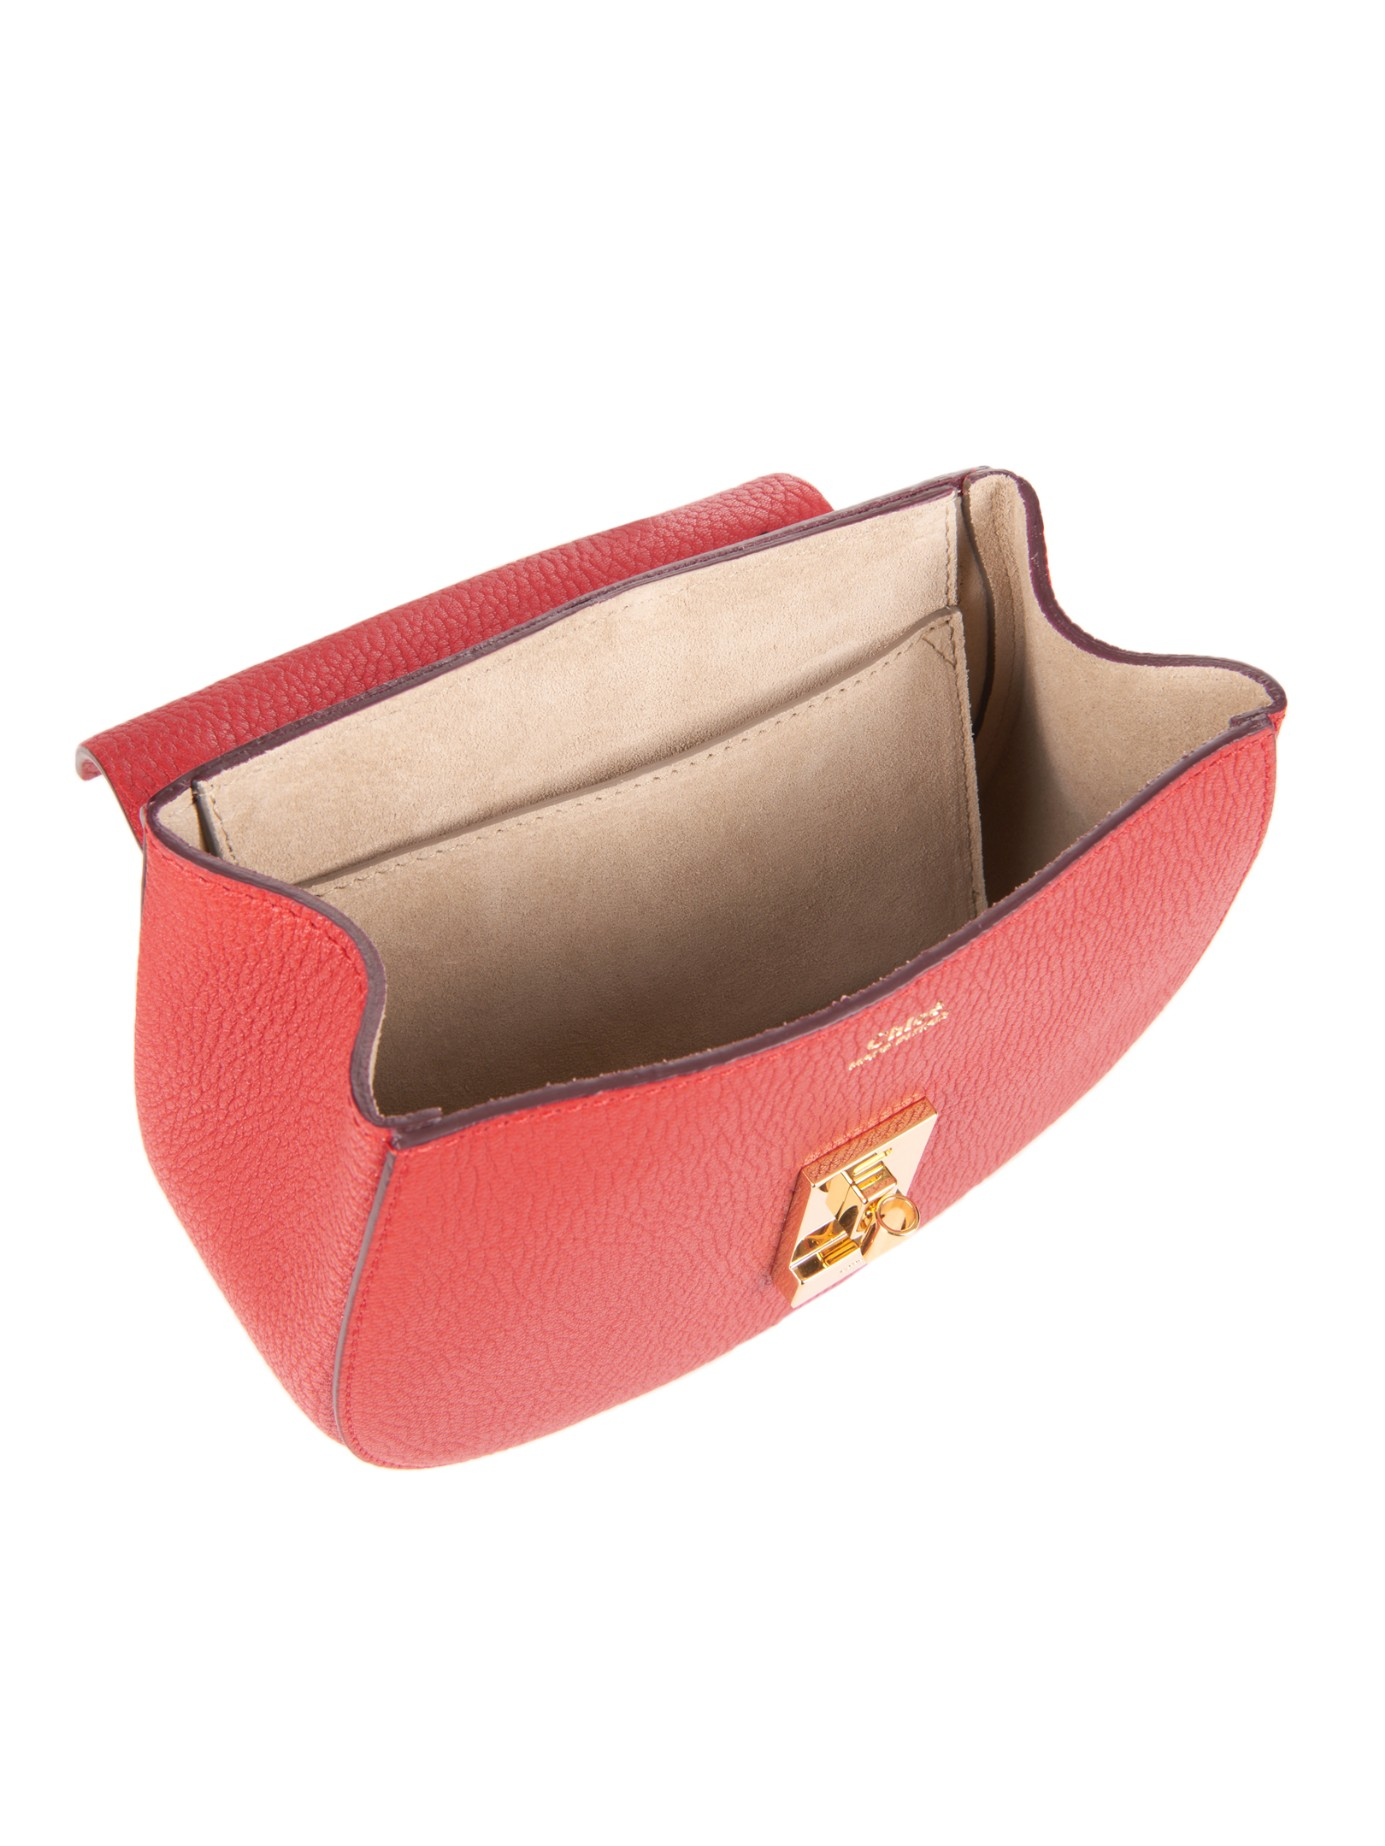 Chlo Drew Mini Leather Cross-body Bag in Red | Lyst